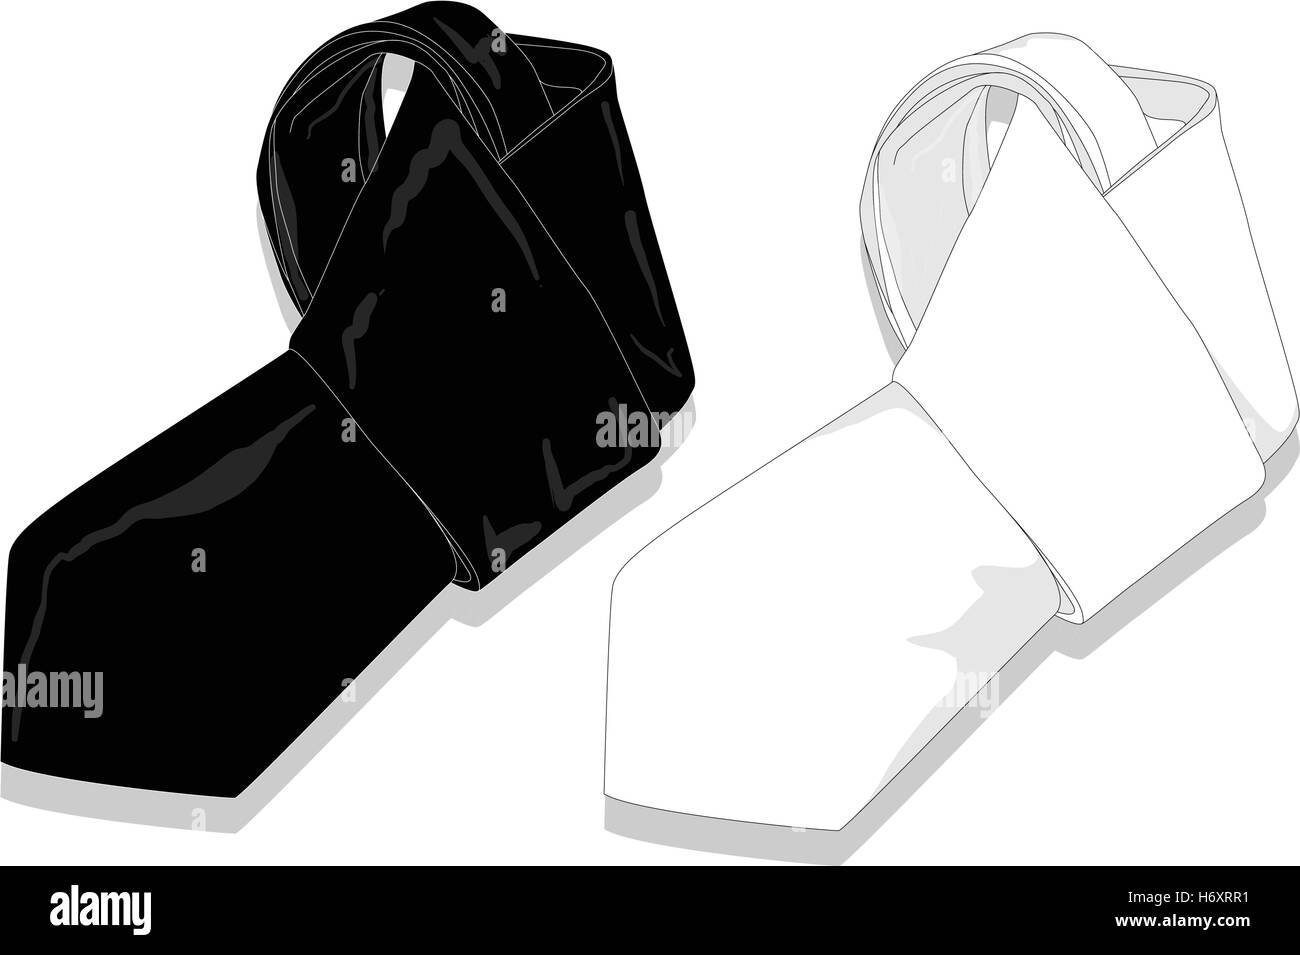 Cravat vector vectors Black and White Stock Photos & Images - Alamy